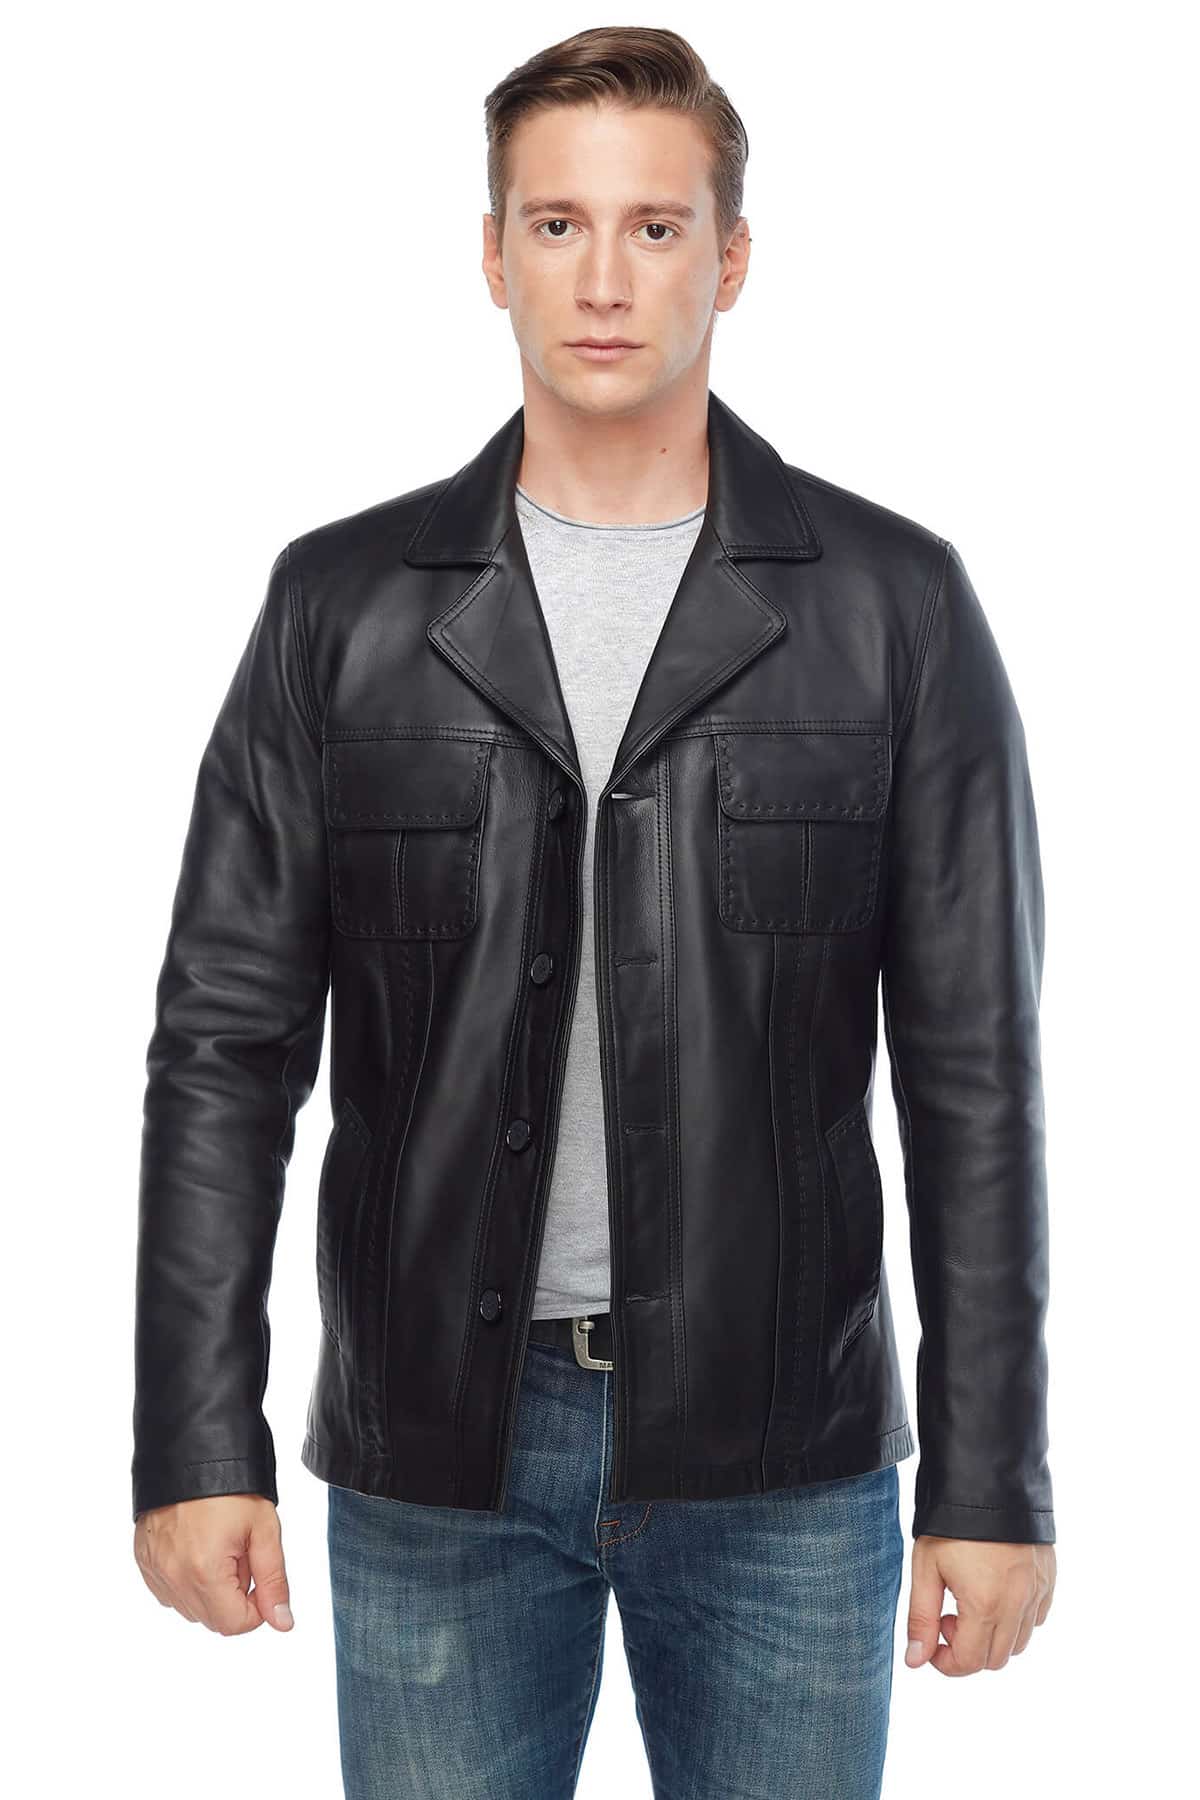 Charley Speed Men’s Leather Coat Black2